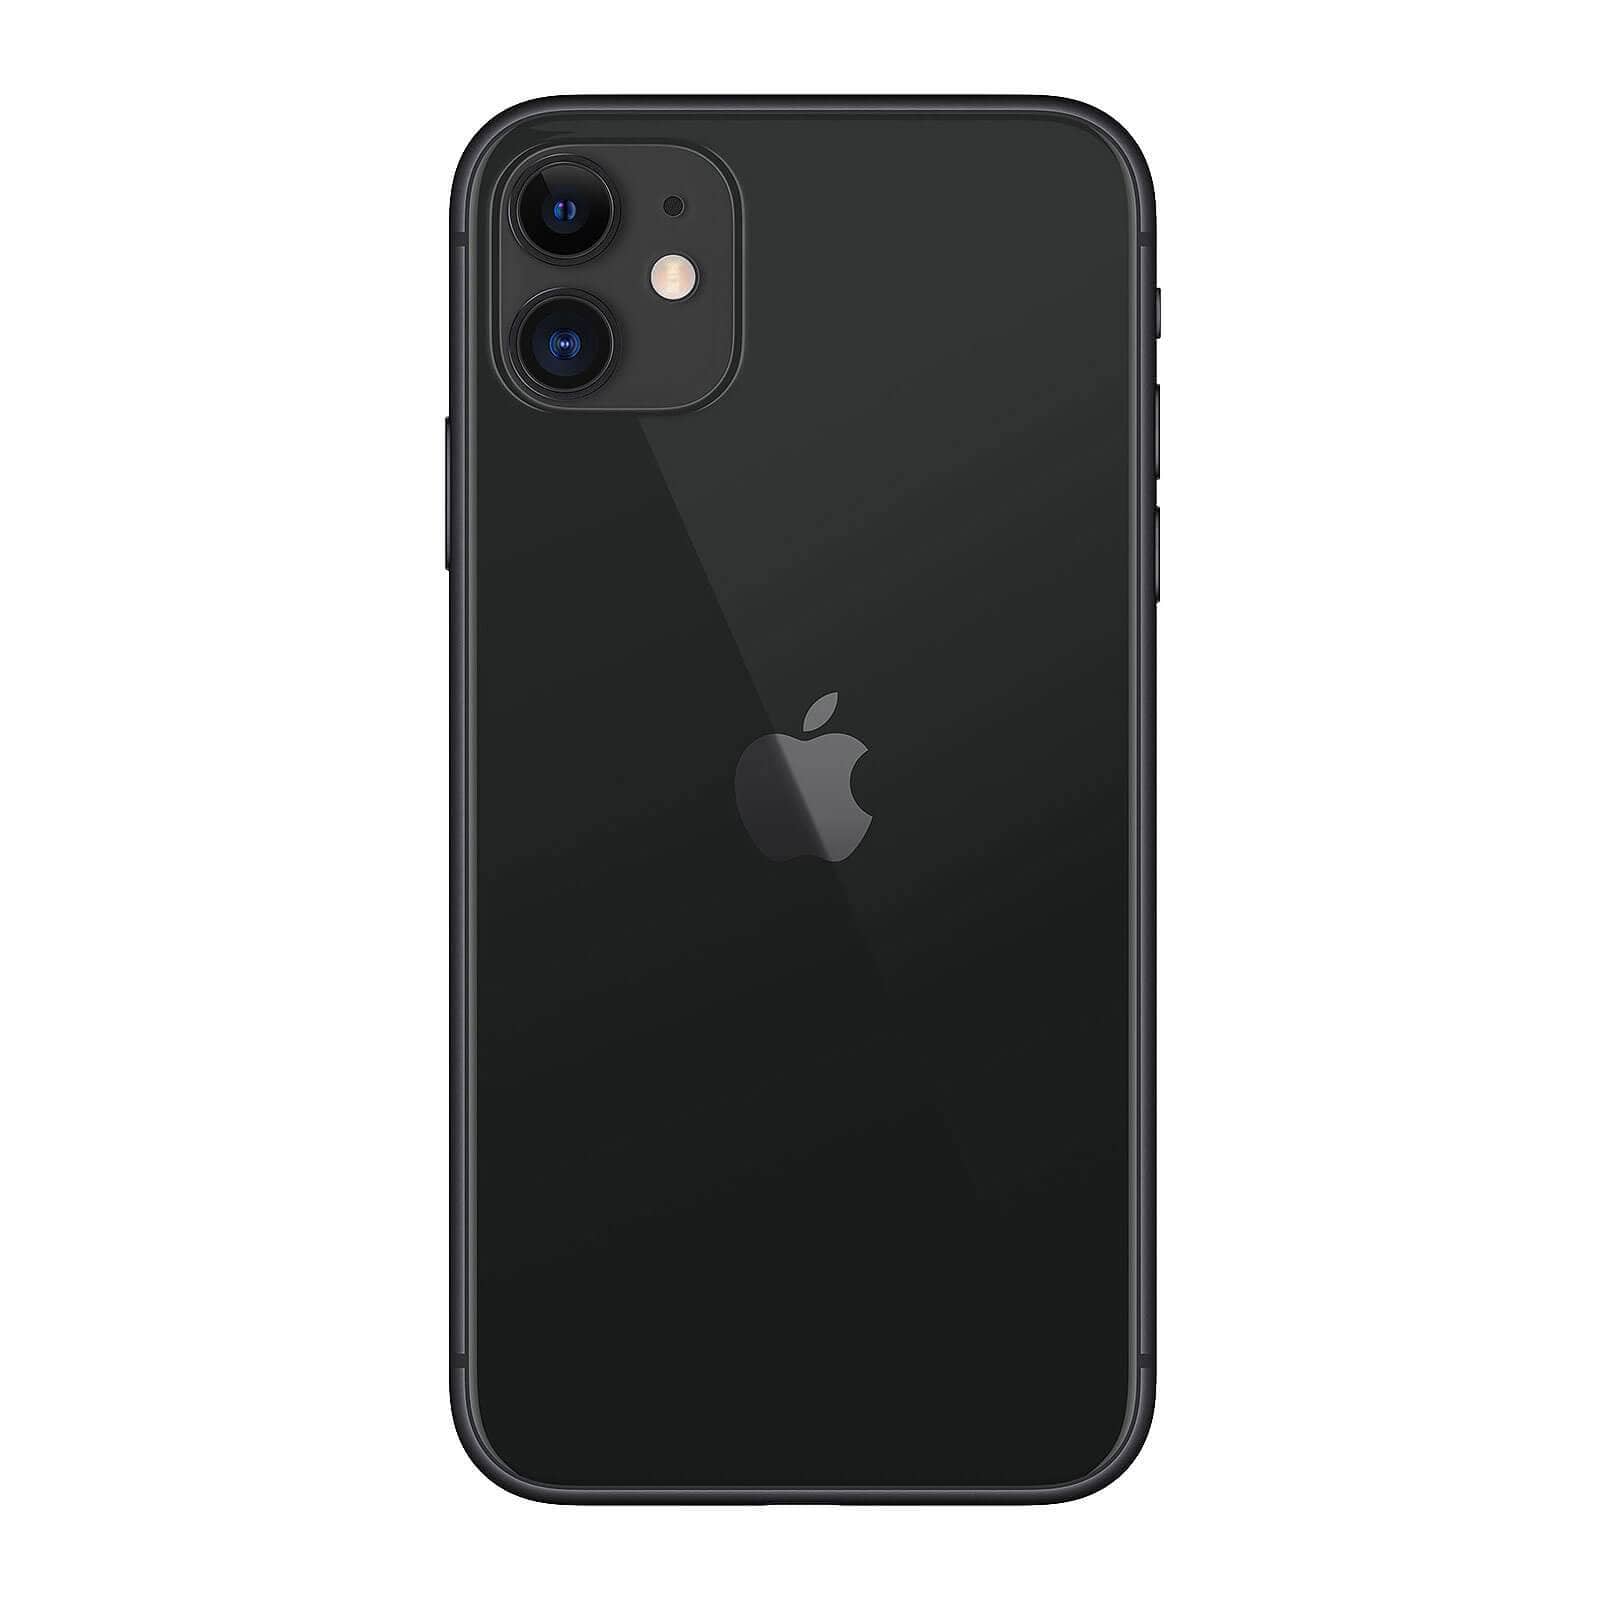 Apple iPhone 11 128GB Black Pristine - Unlocked